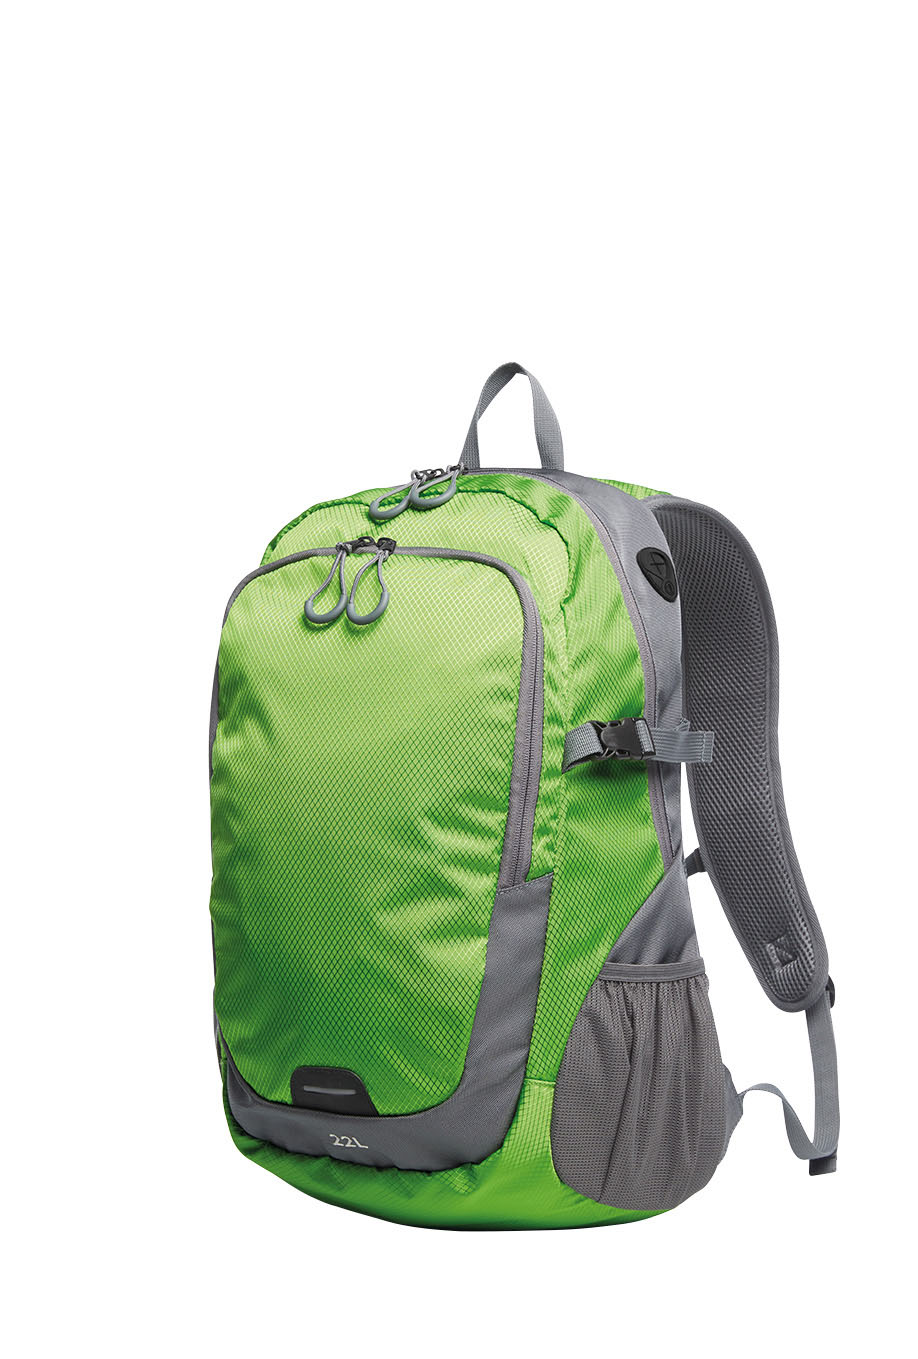 backpack STEP L